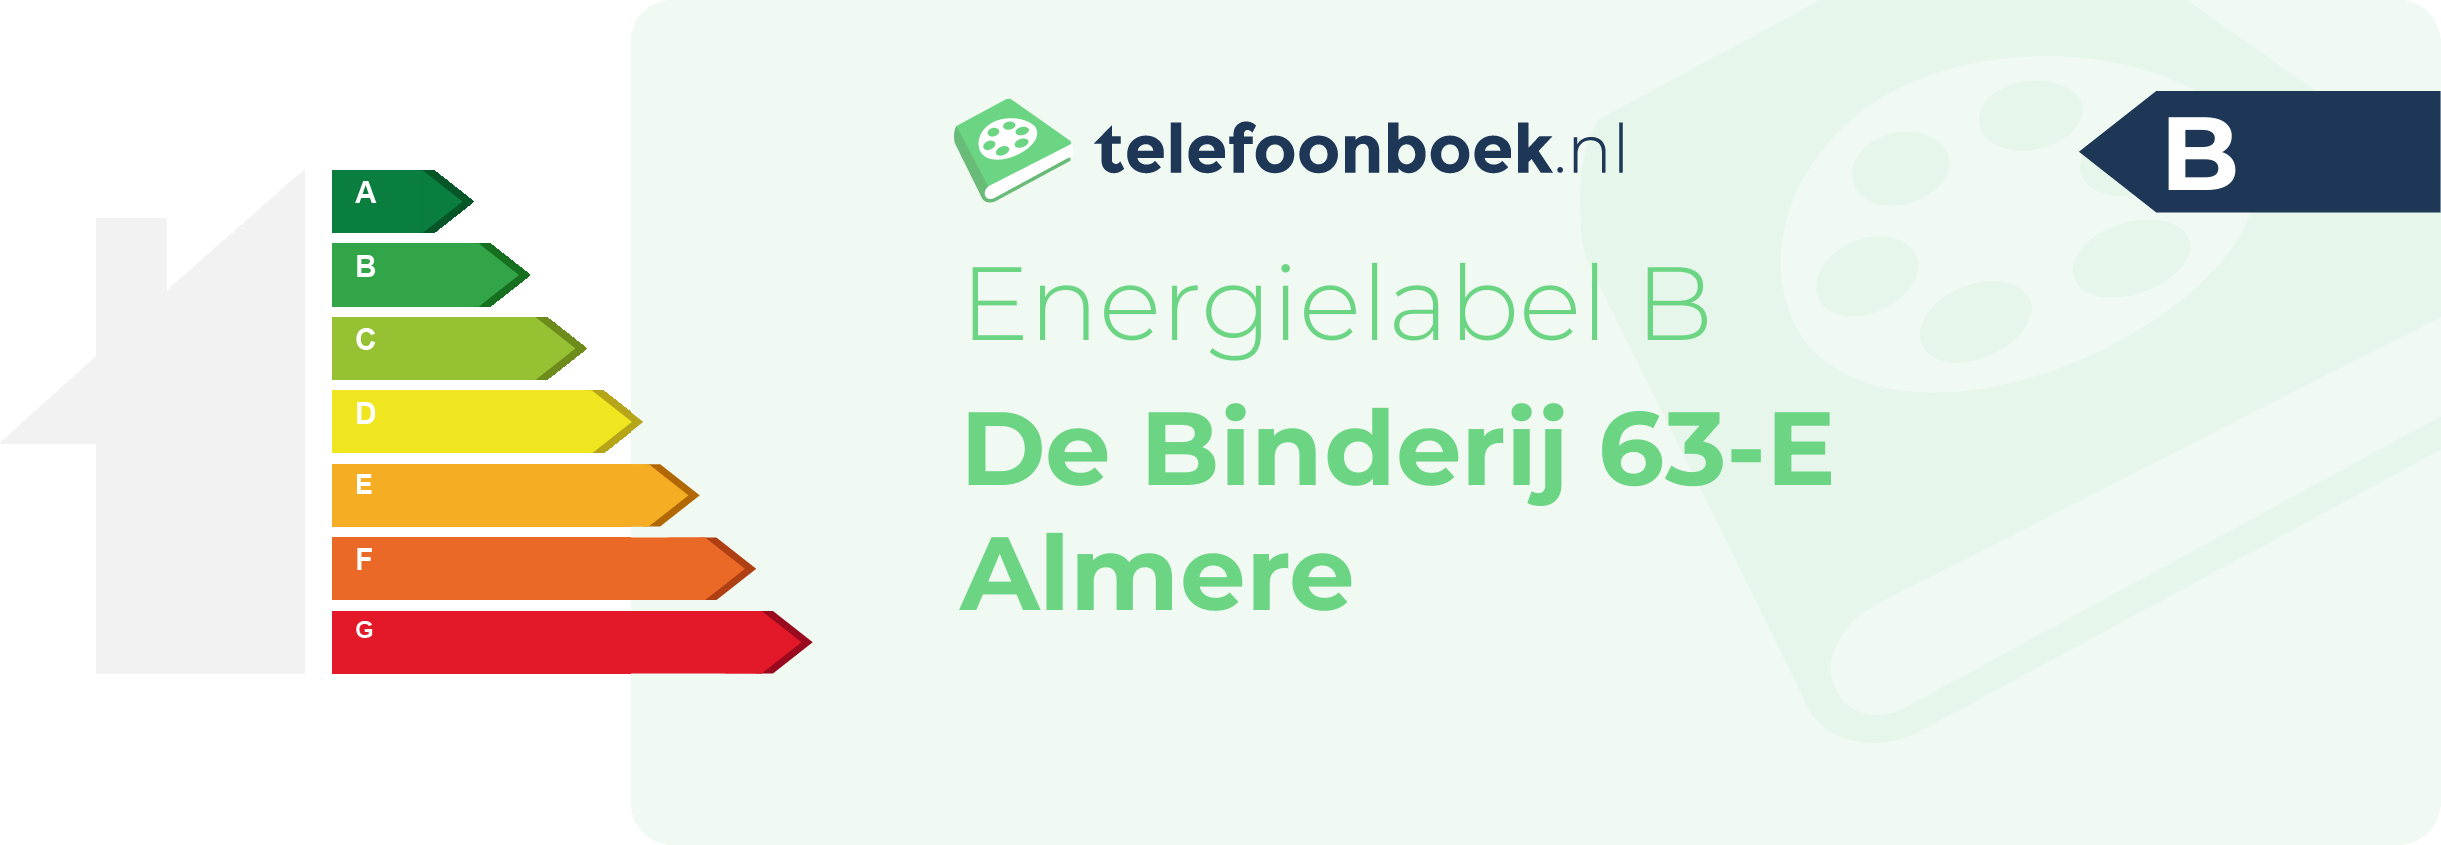 Energielabel De Binderij 63-E Almere